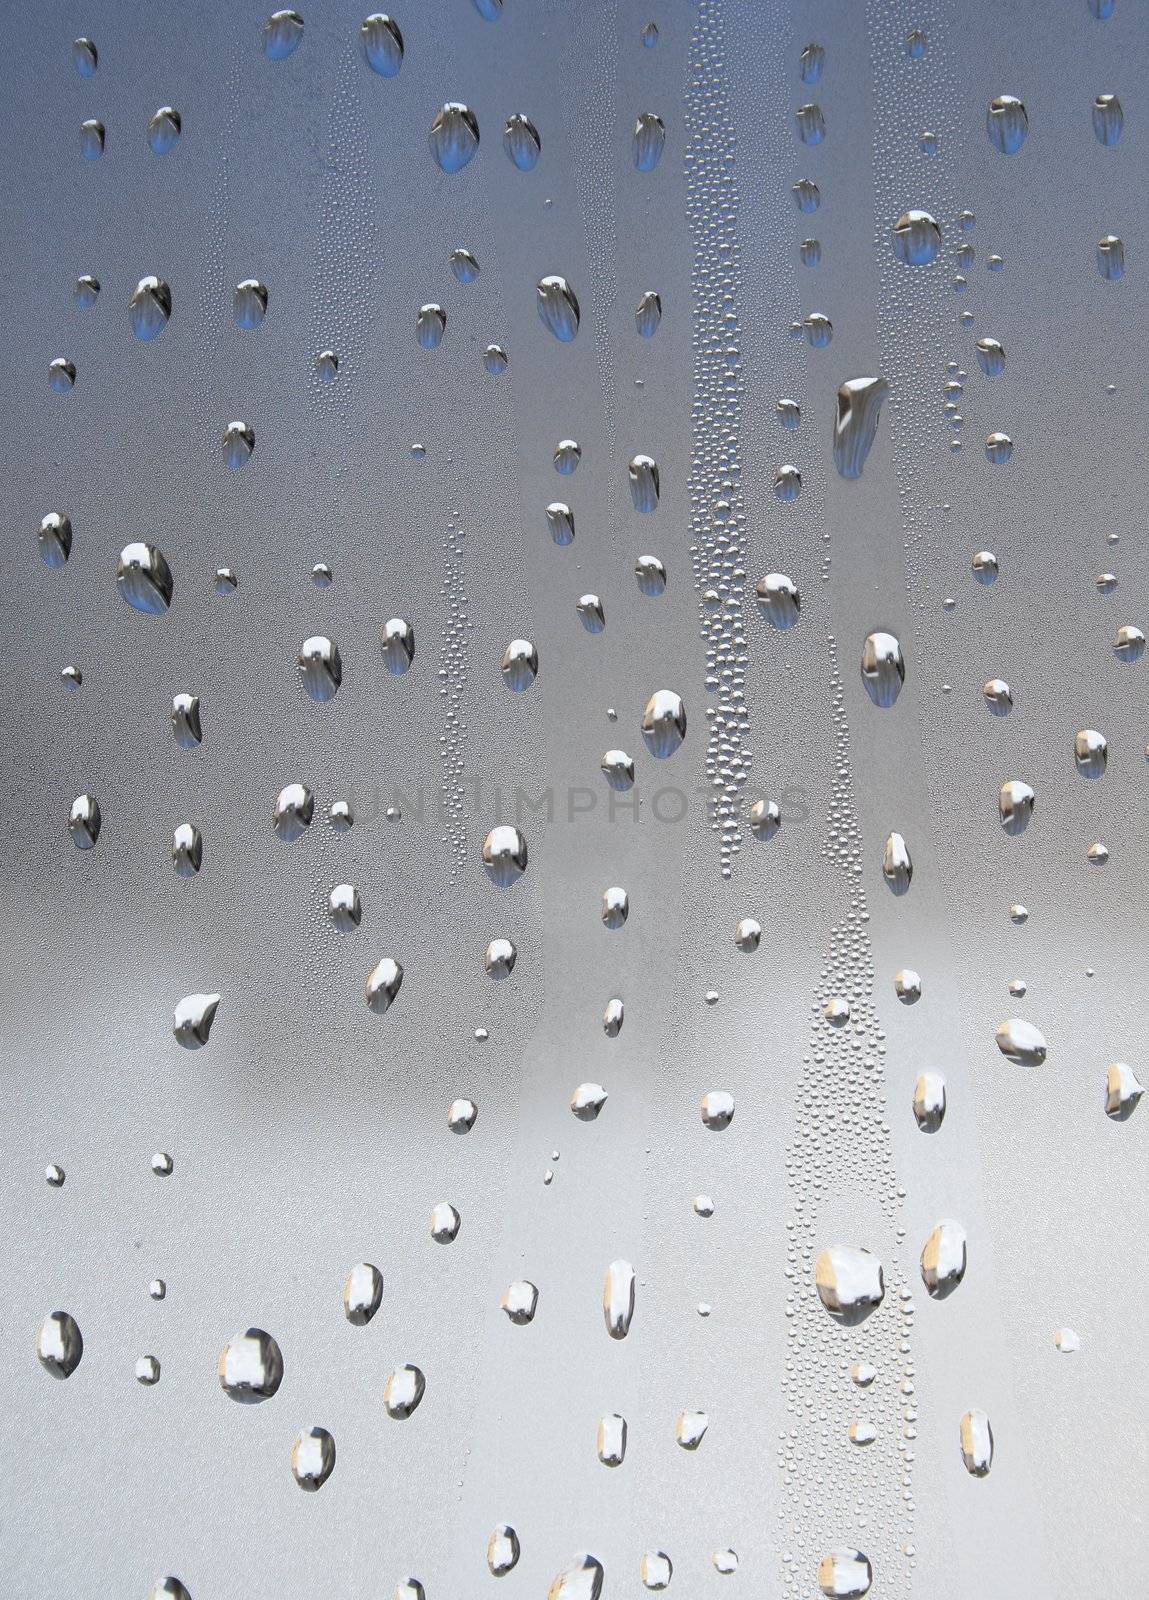 Water drops texture by anikasalsera